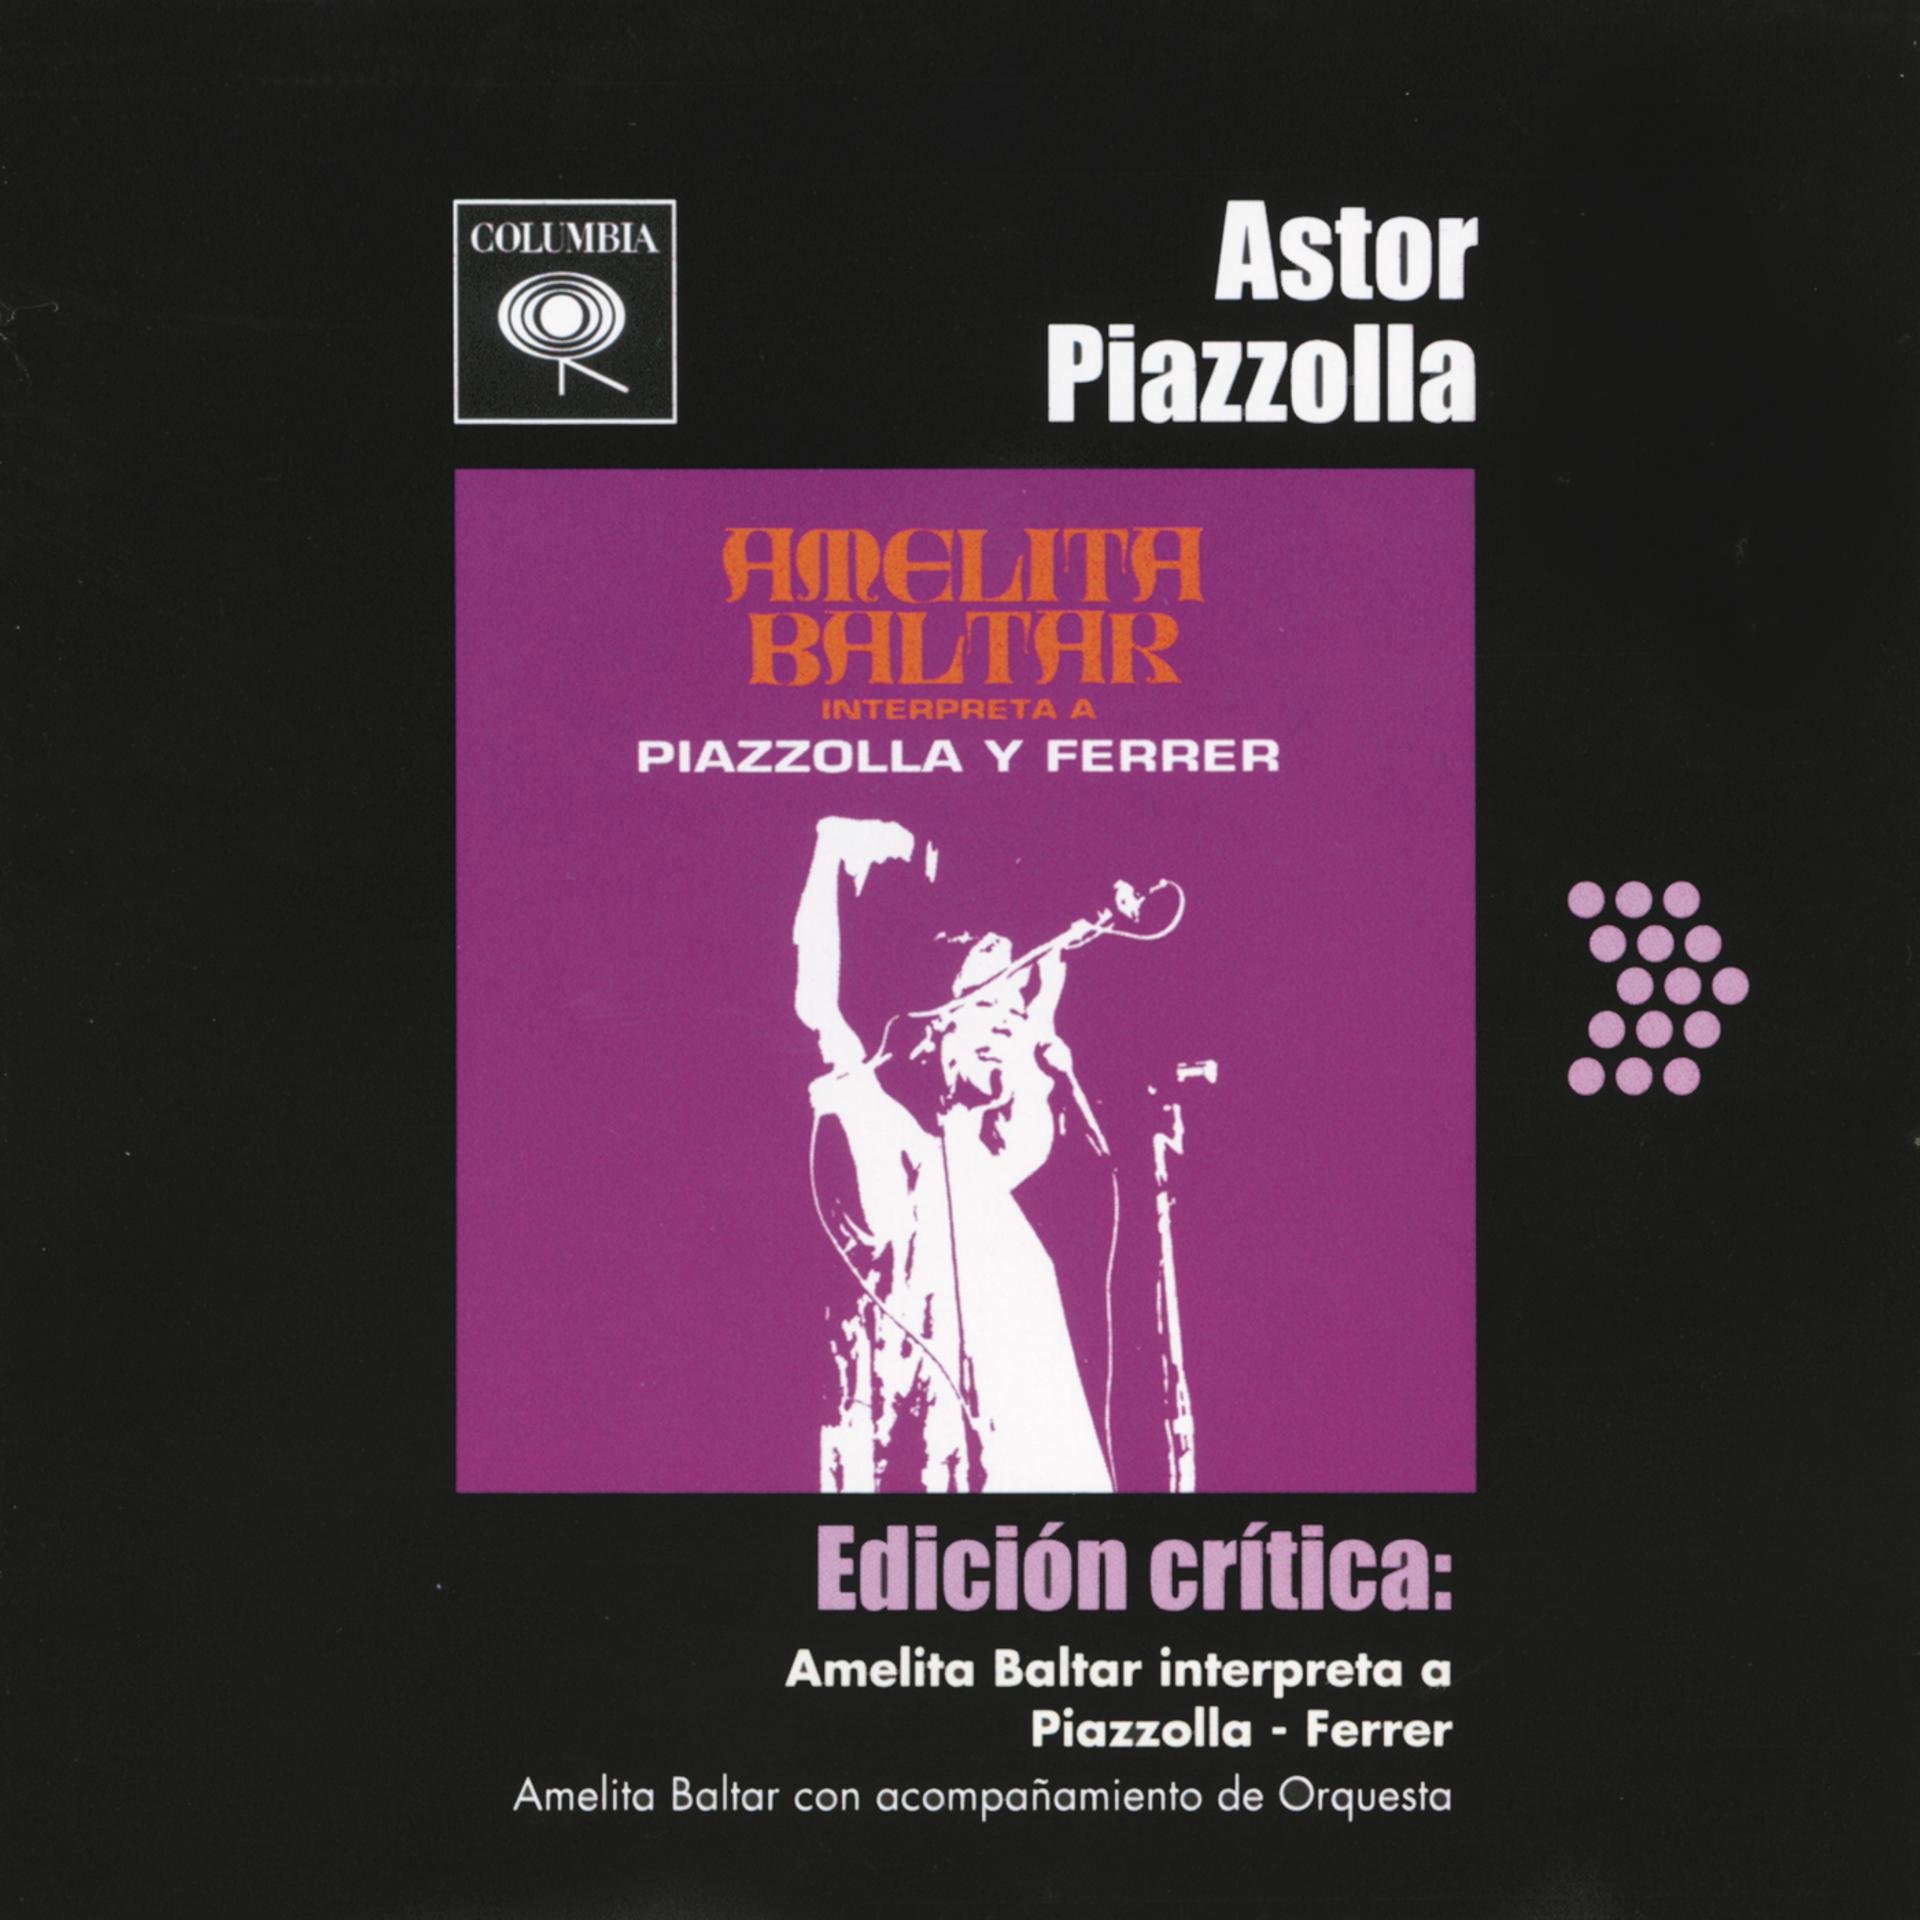 Постер альбома Edición Crítica: Amelita Baltar Interpretreta A Piazzolla - Ferrer